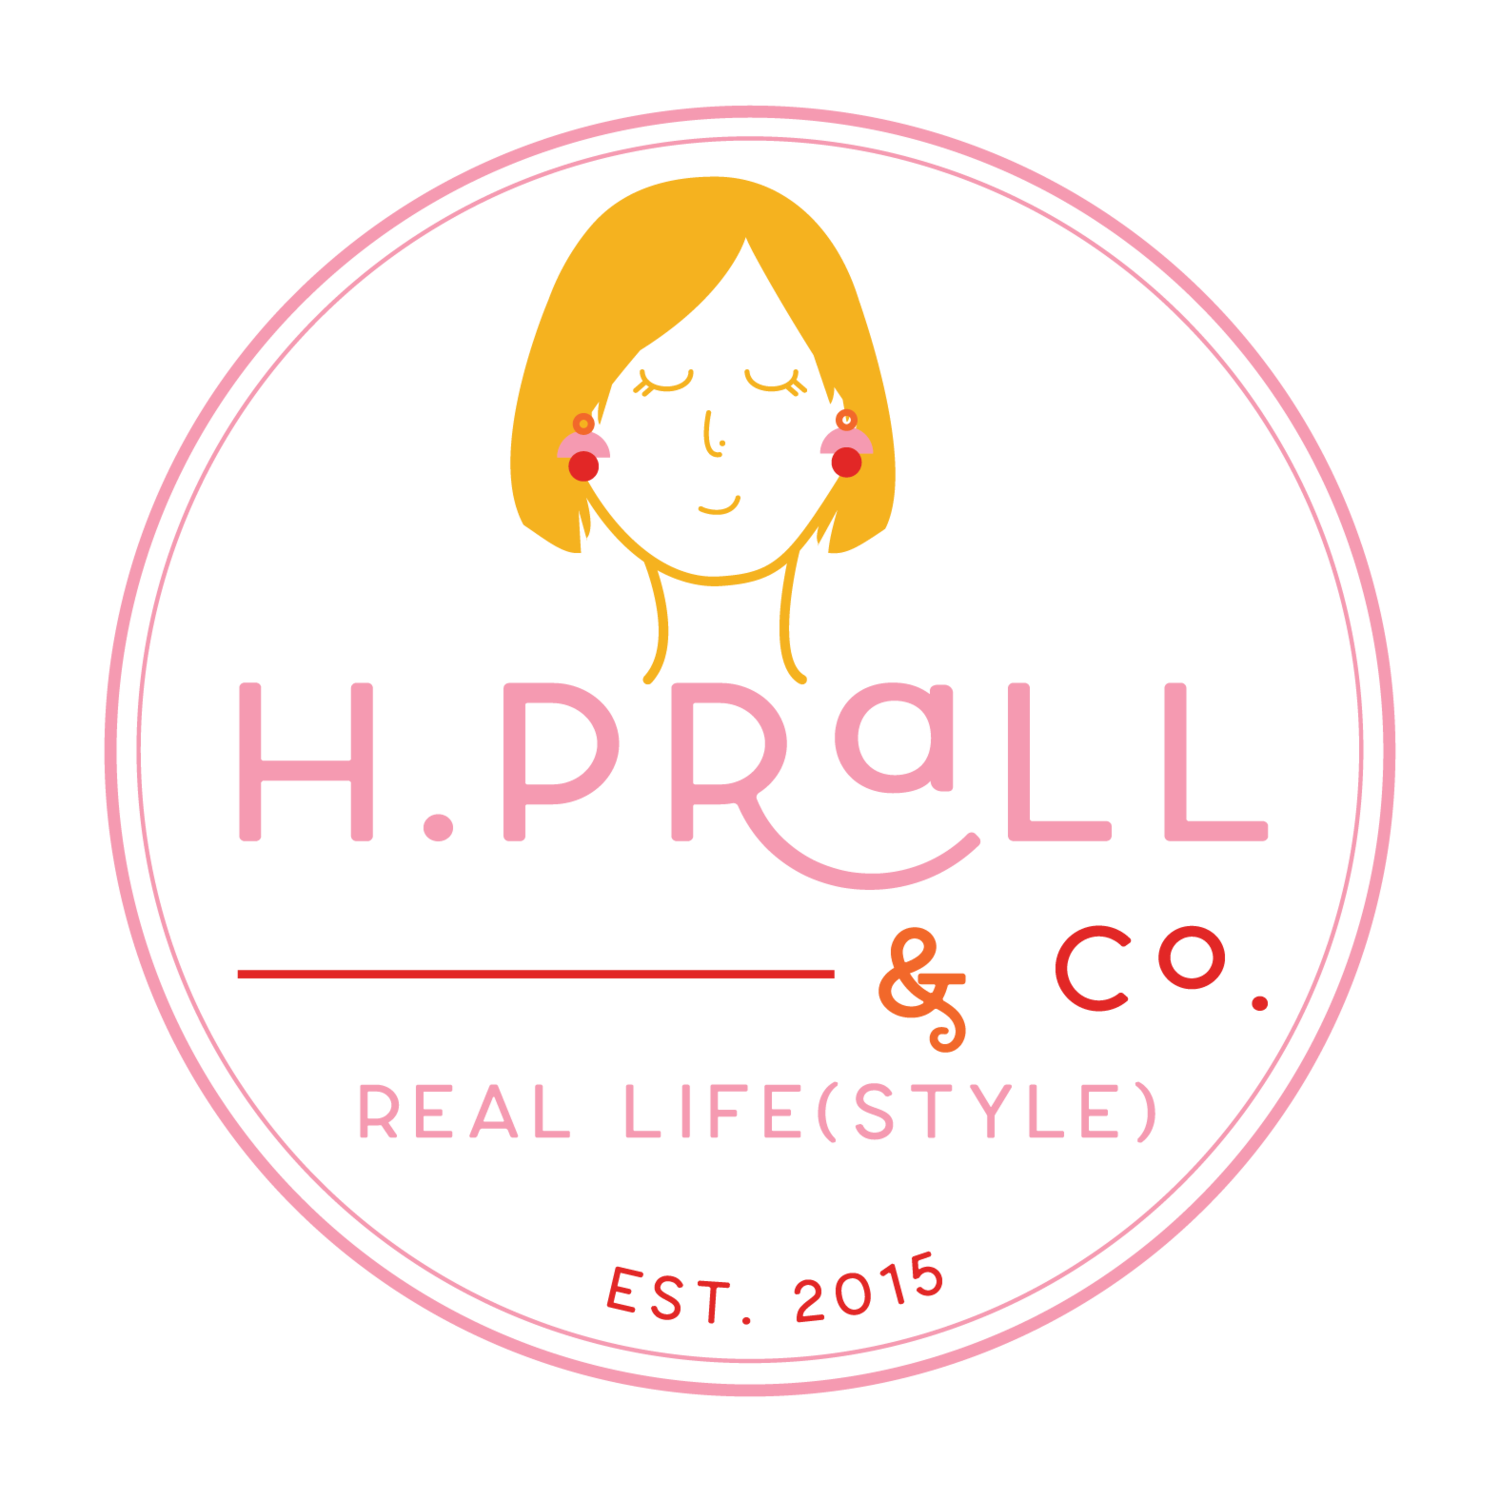 H.Prall & Co.